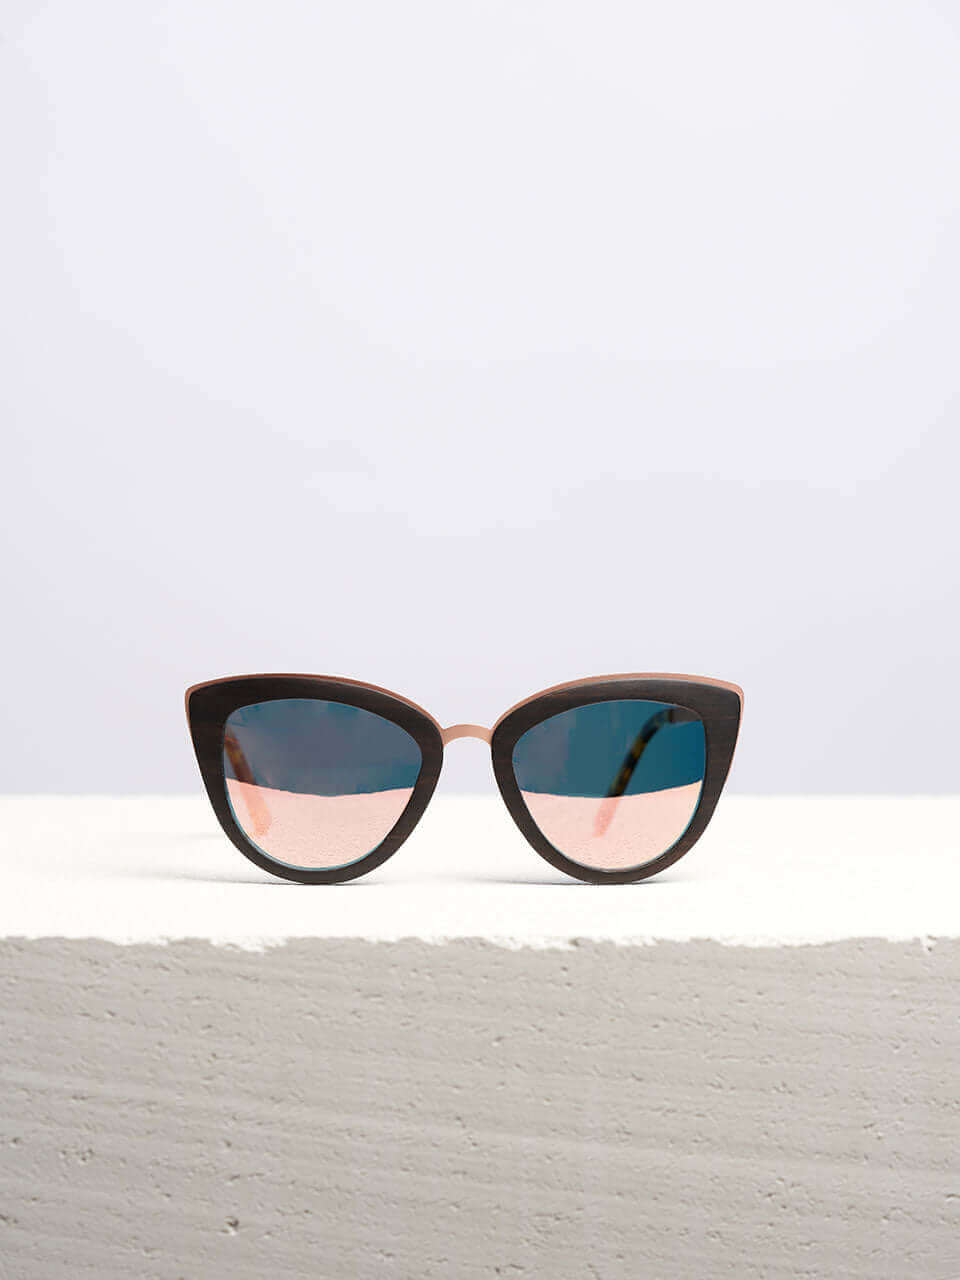 Wooden Sunglasses kept on a white platform